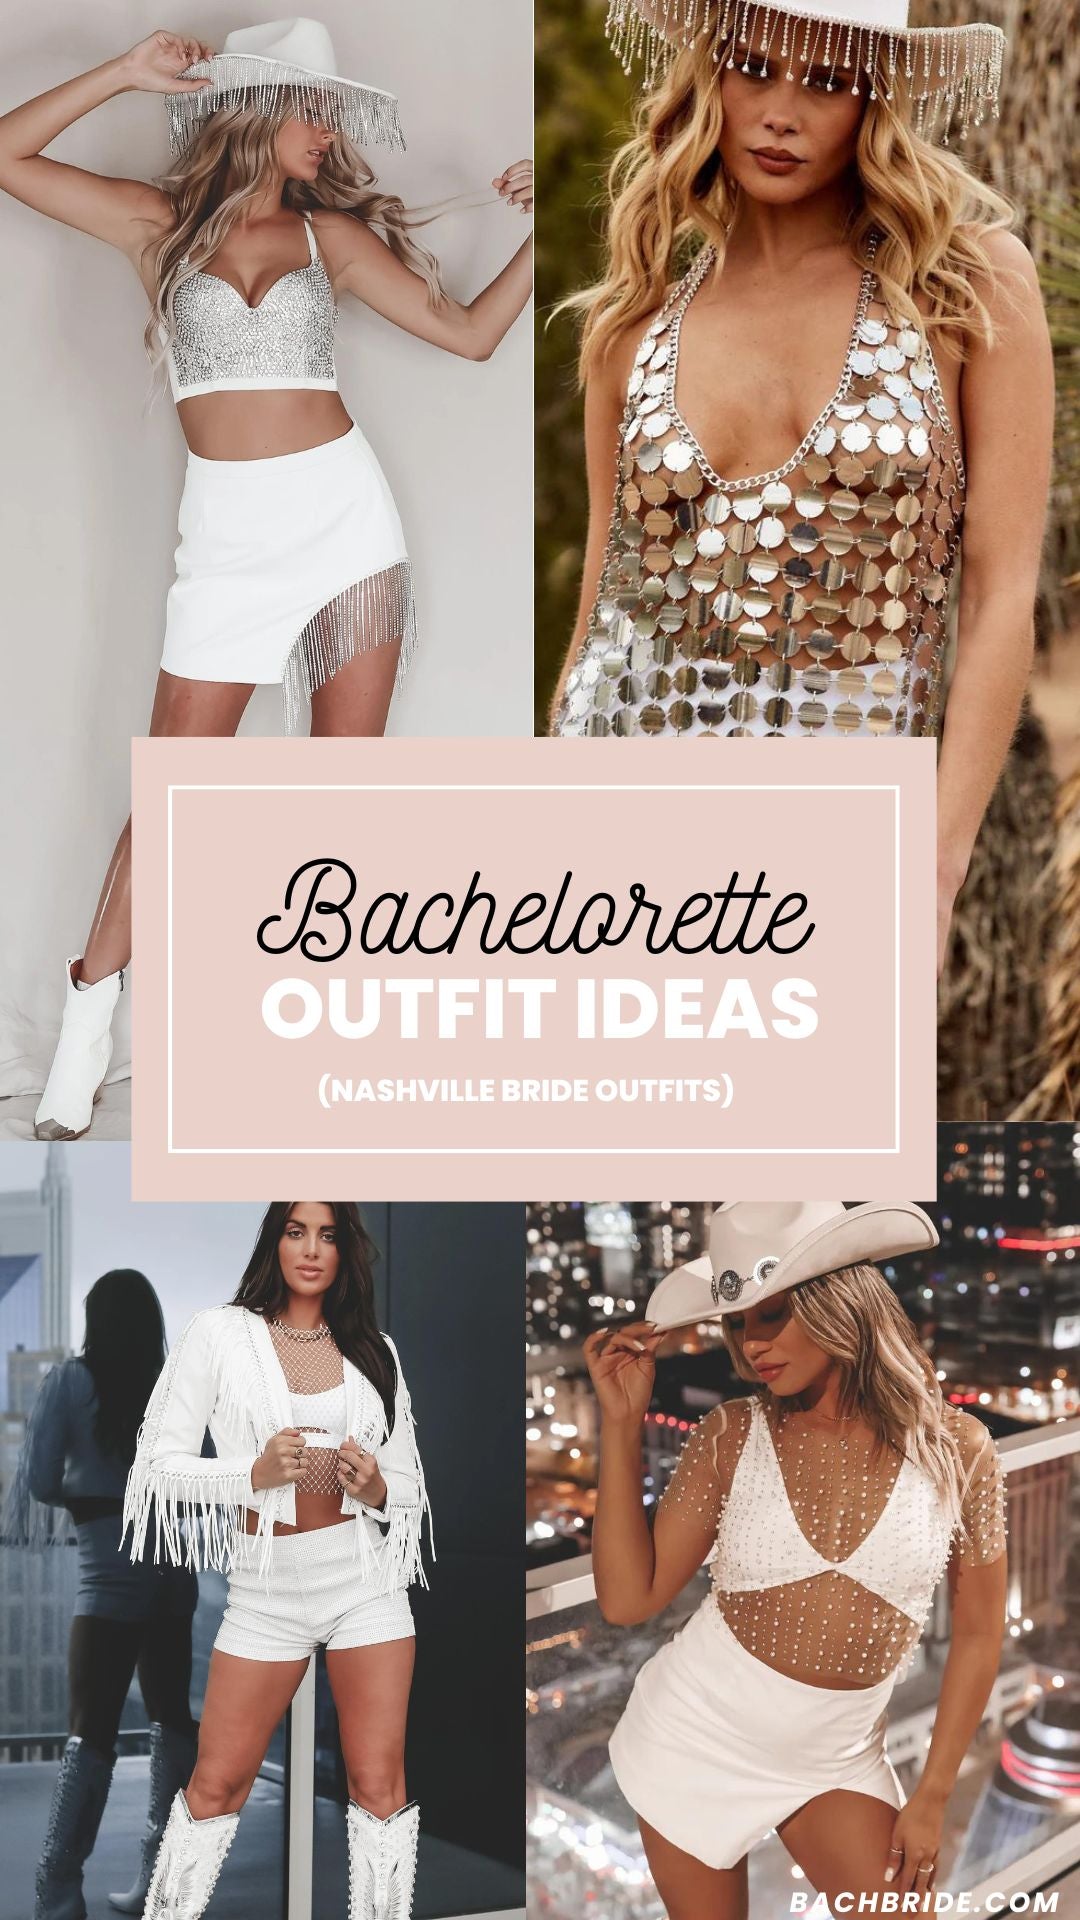 bachelorette party bridesmaid pajamas 3 eb2ff003 e5a9 4d7c bf0f